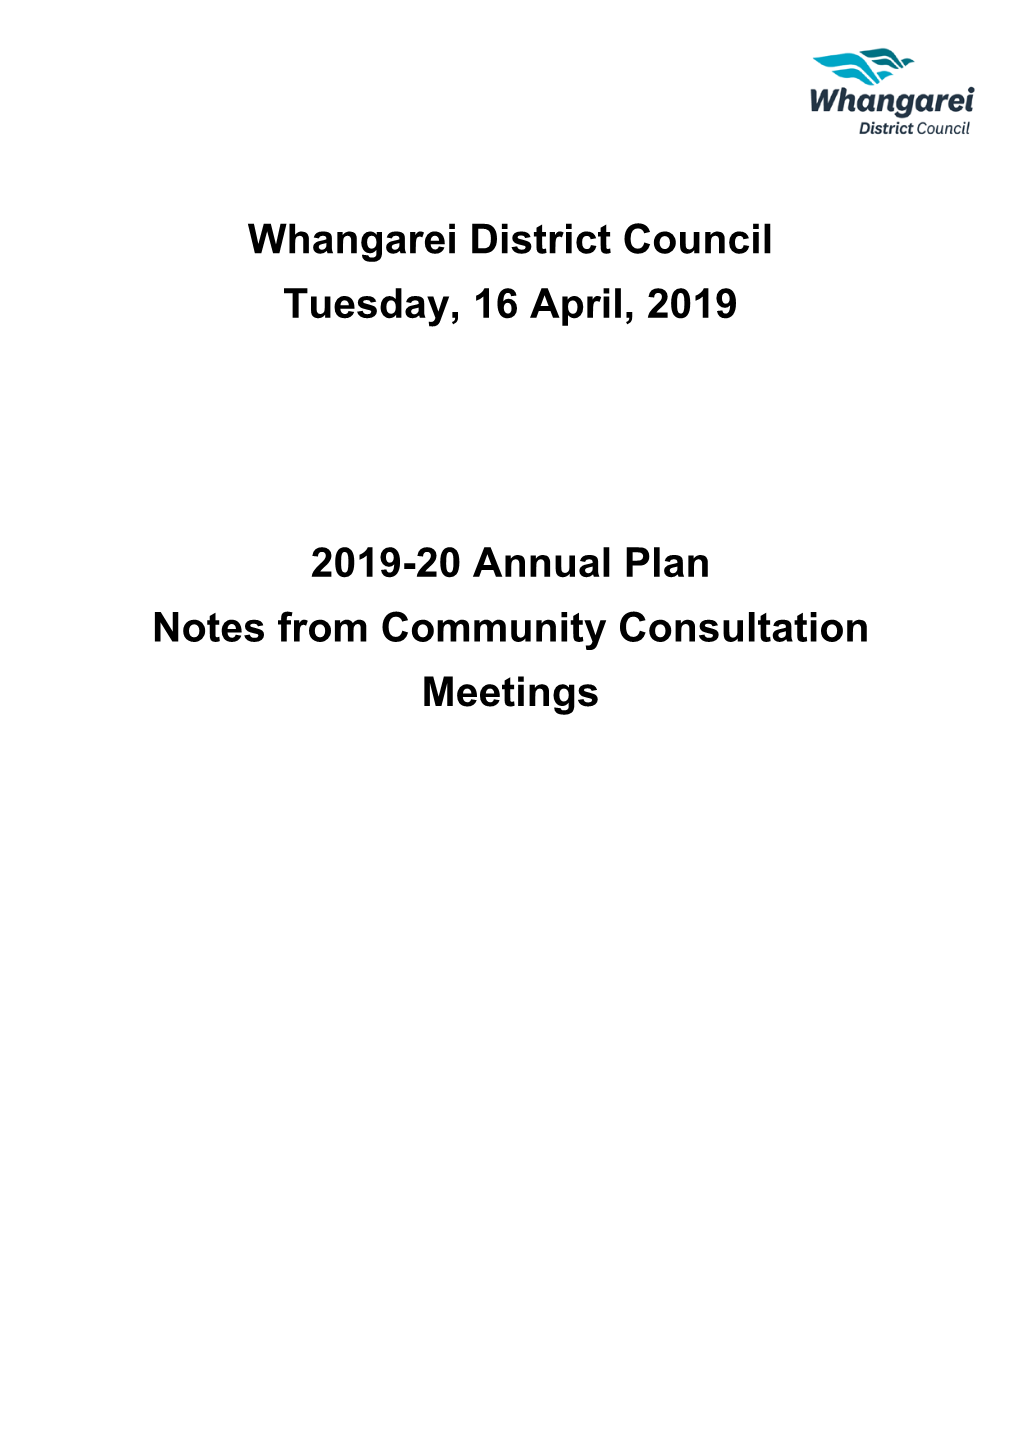 Whangarei District Council Tuesday, 16 April, 2019 2019-20 Annual Plan